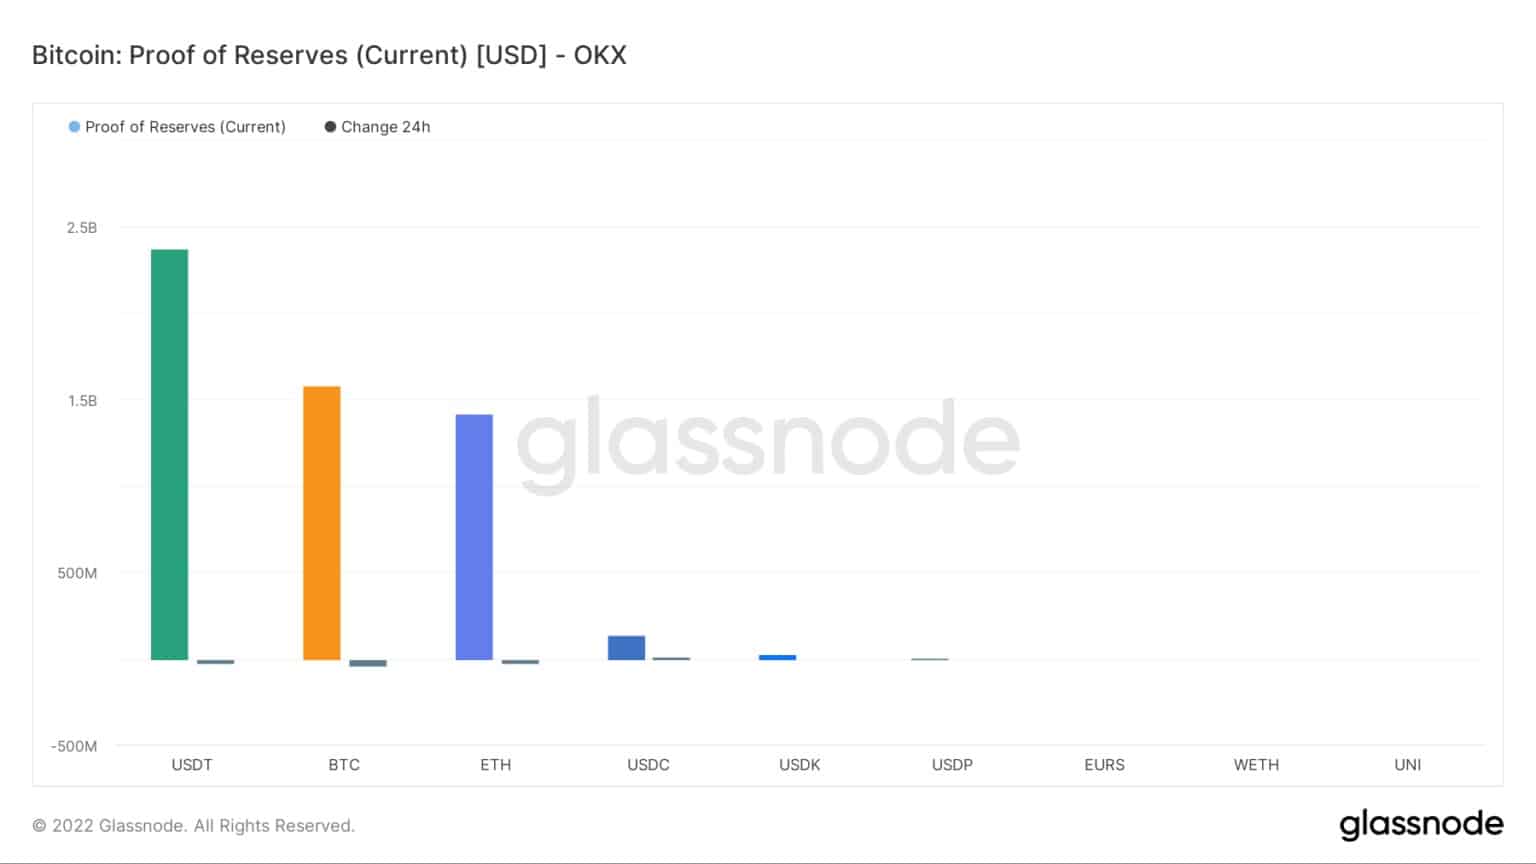 Prueba de reservas - OKX / Fuente: Glassnode